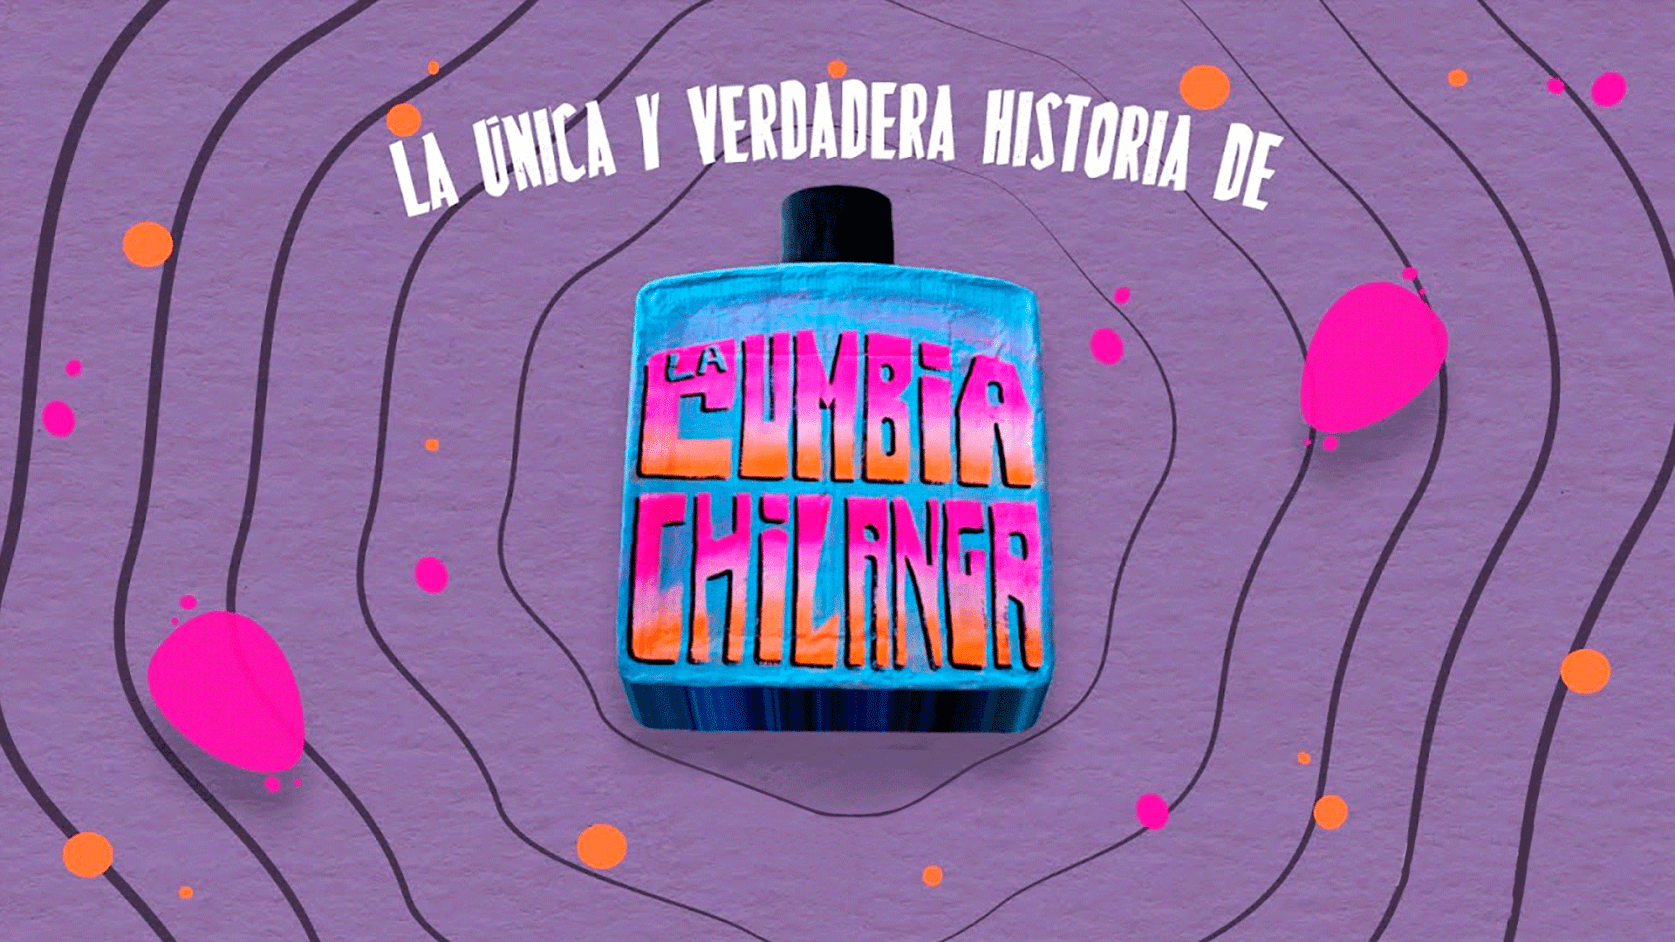 La Única y Verdadera Historia de la Cumbia Chilanga